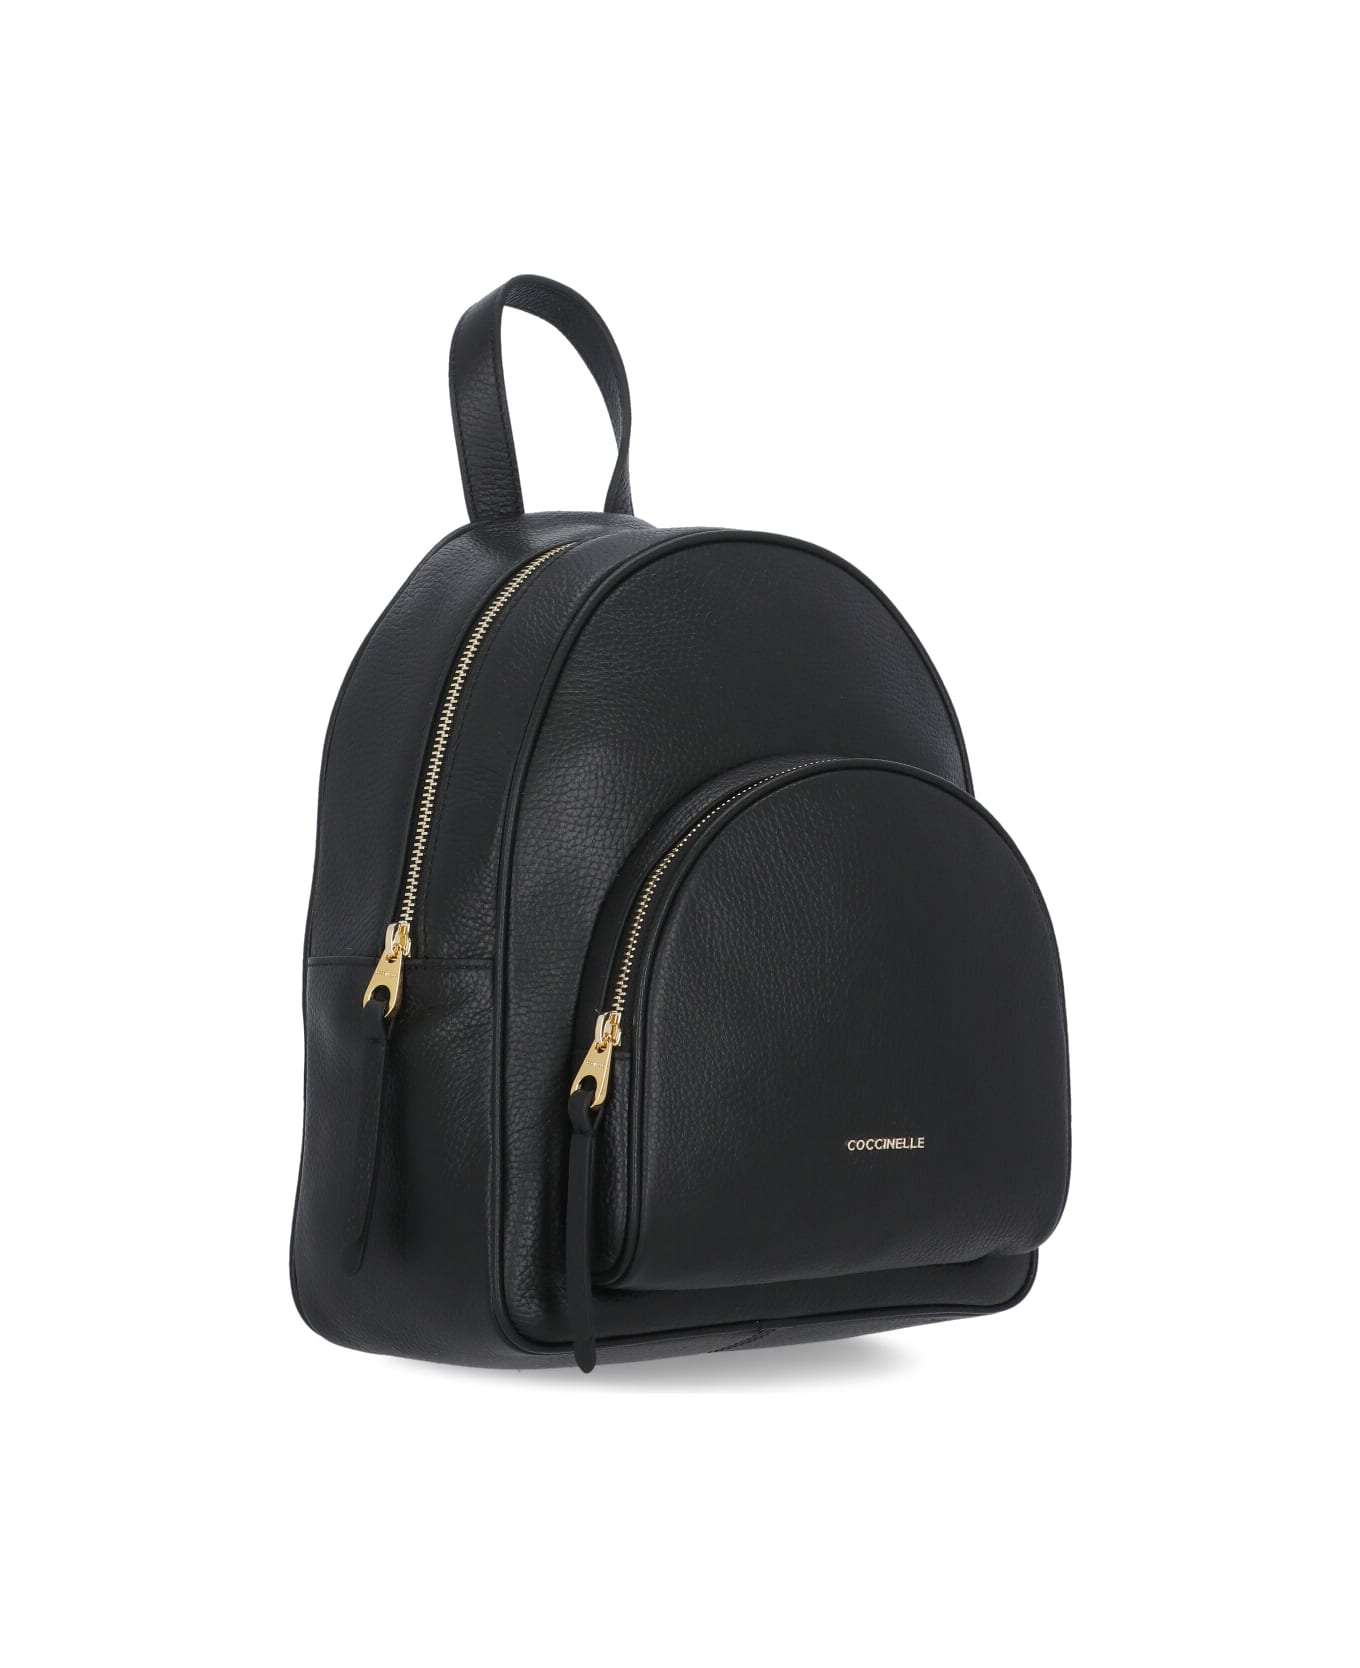 Coccinelle Gleen Backpack - Black